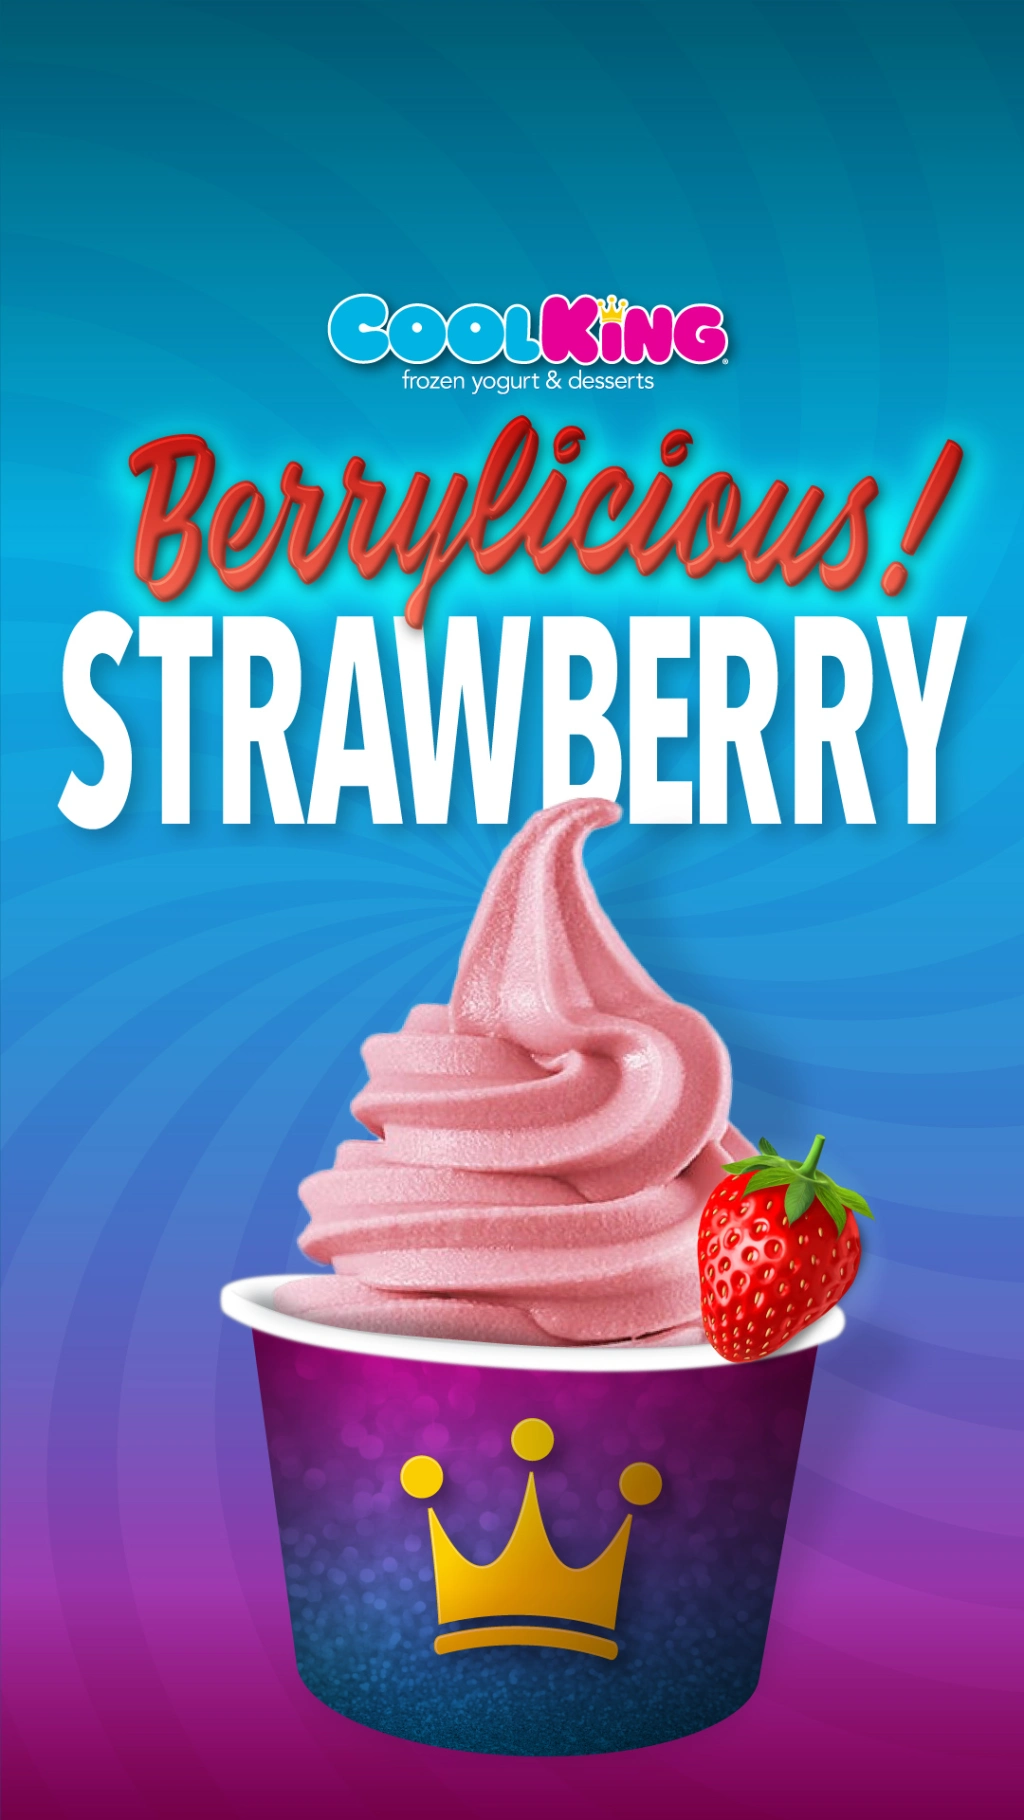 Cool King® “Berrylicious!” Strawberry Frozen Yogurt